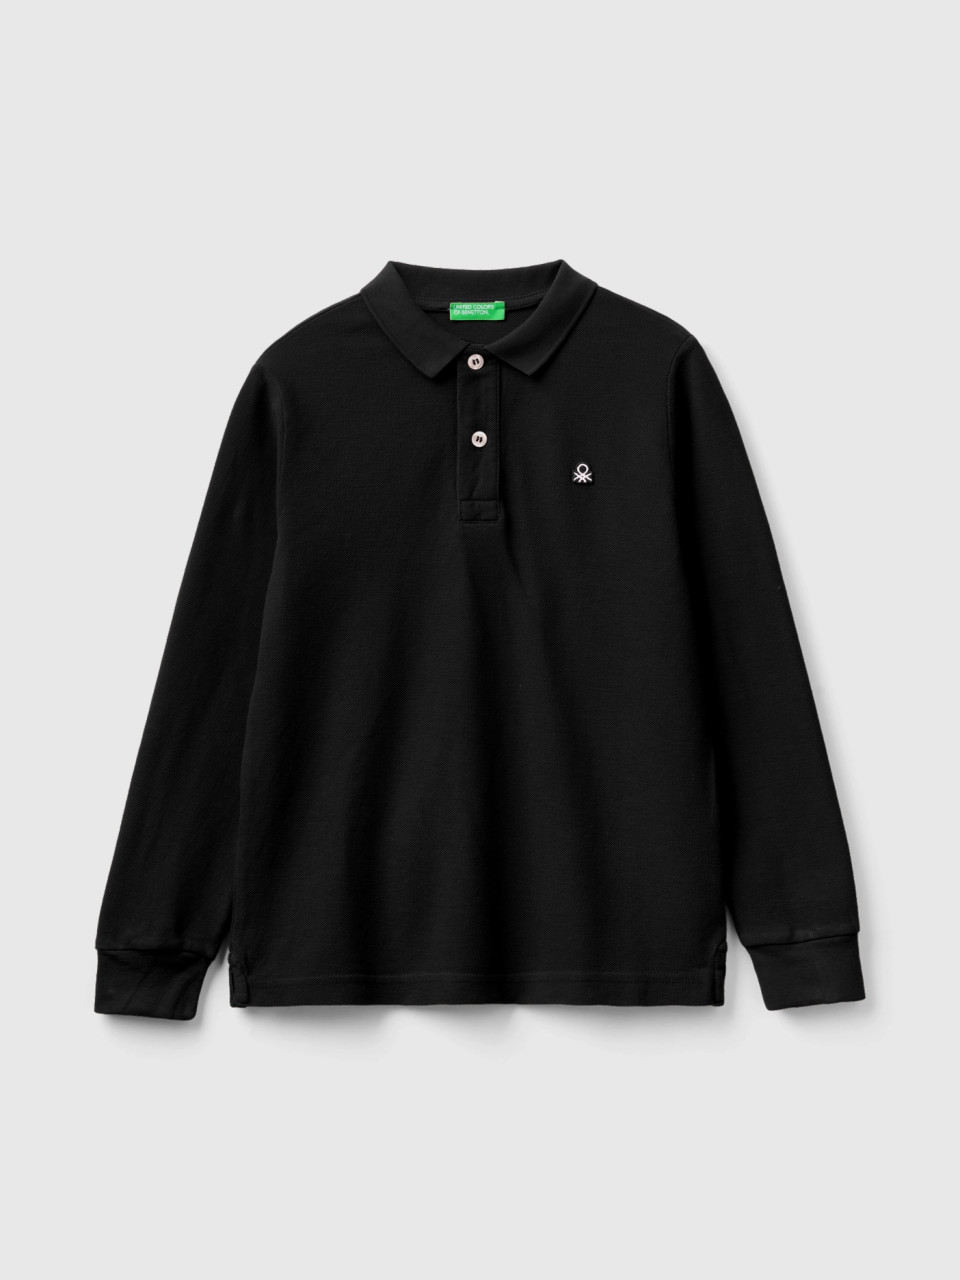 Benetton, 100% Organic Cotton Long Sleeve Polo, Black, Kids